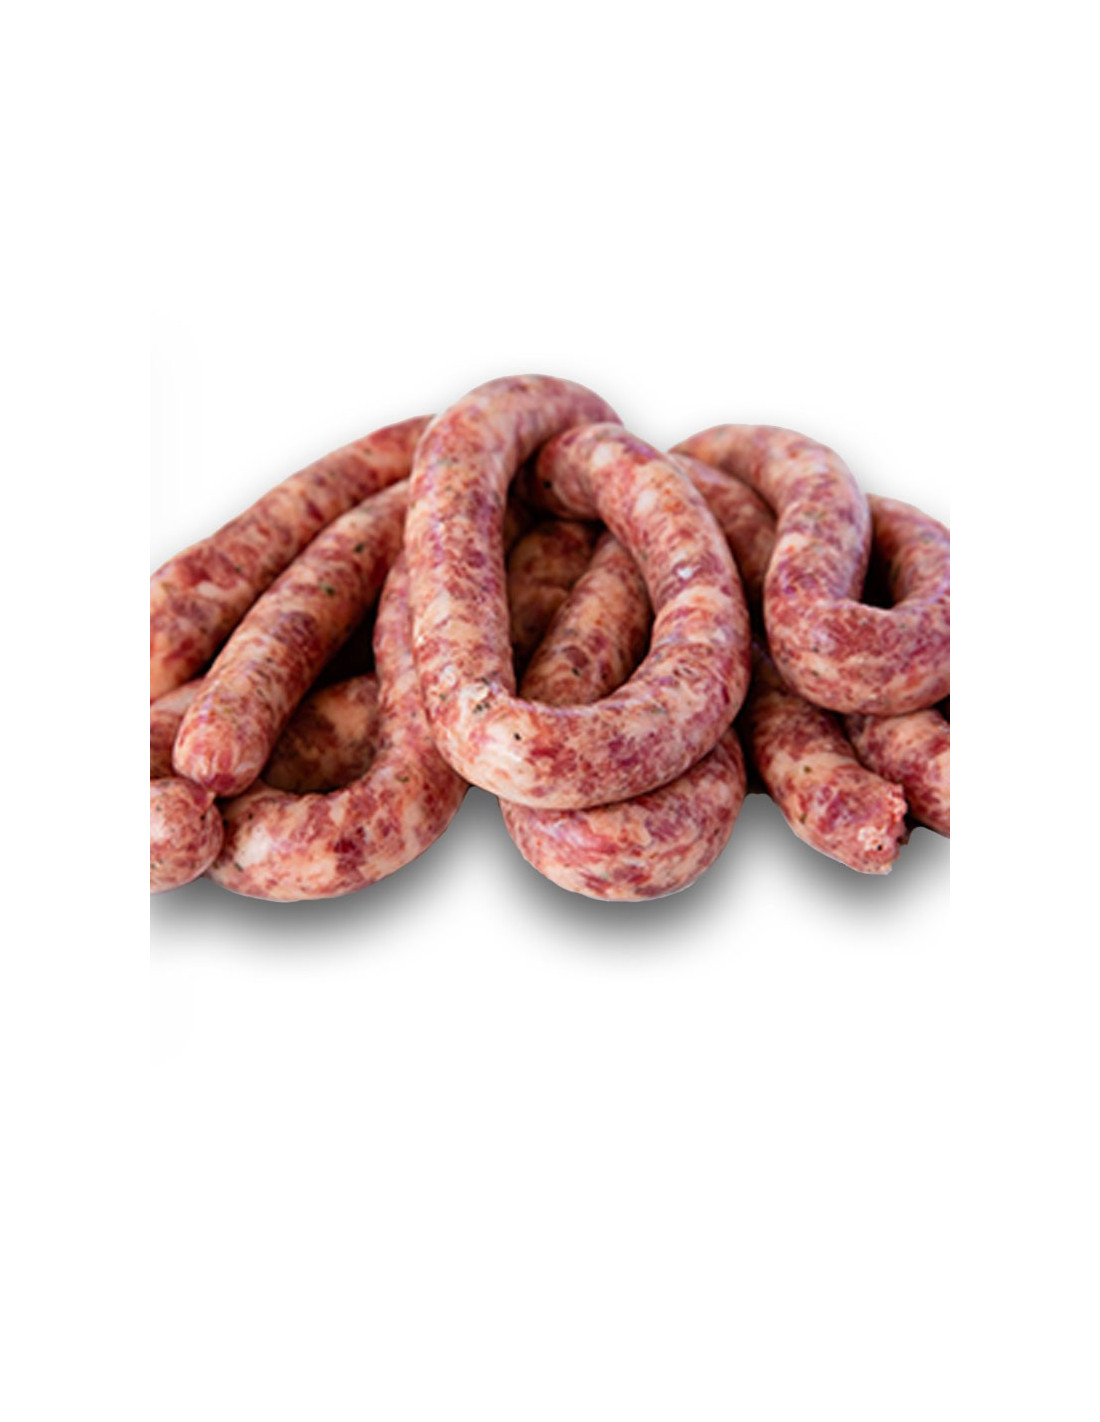 1.5kg - Parrillera Sausage, Buy from Salchicha